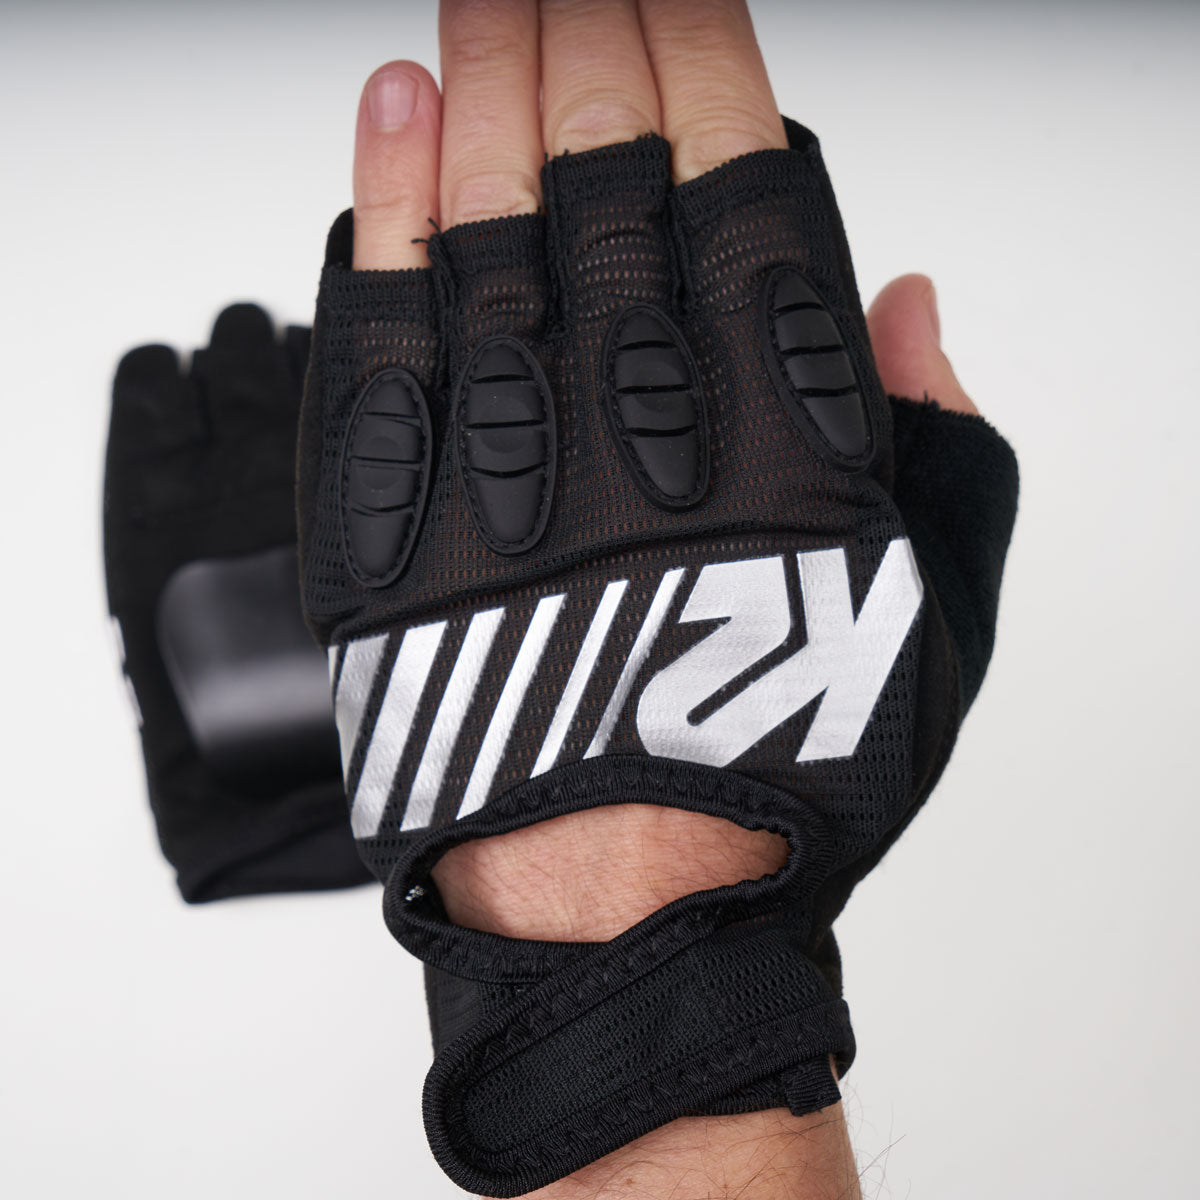 K2 Redline Race Guards - Skate Gloves